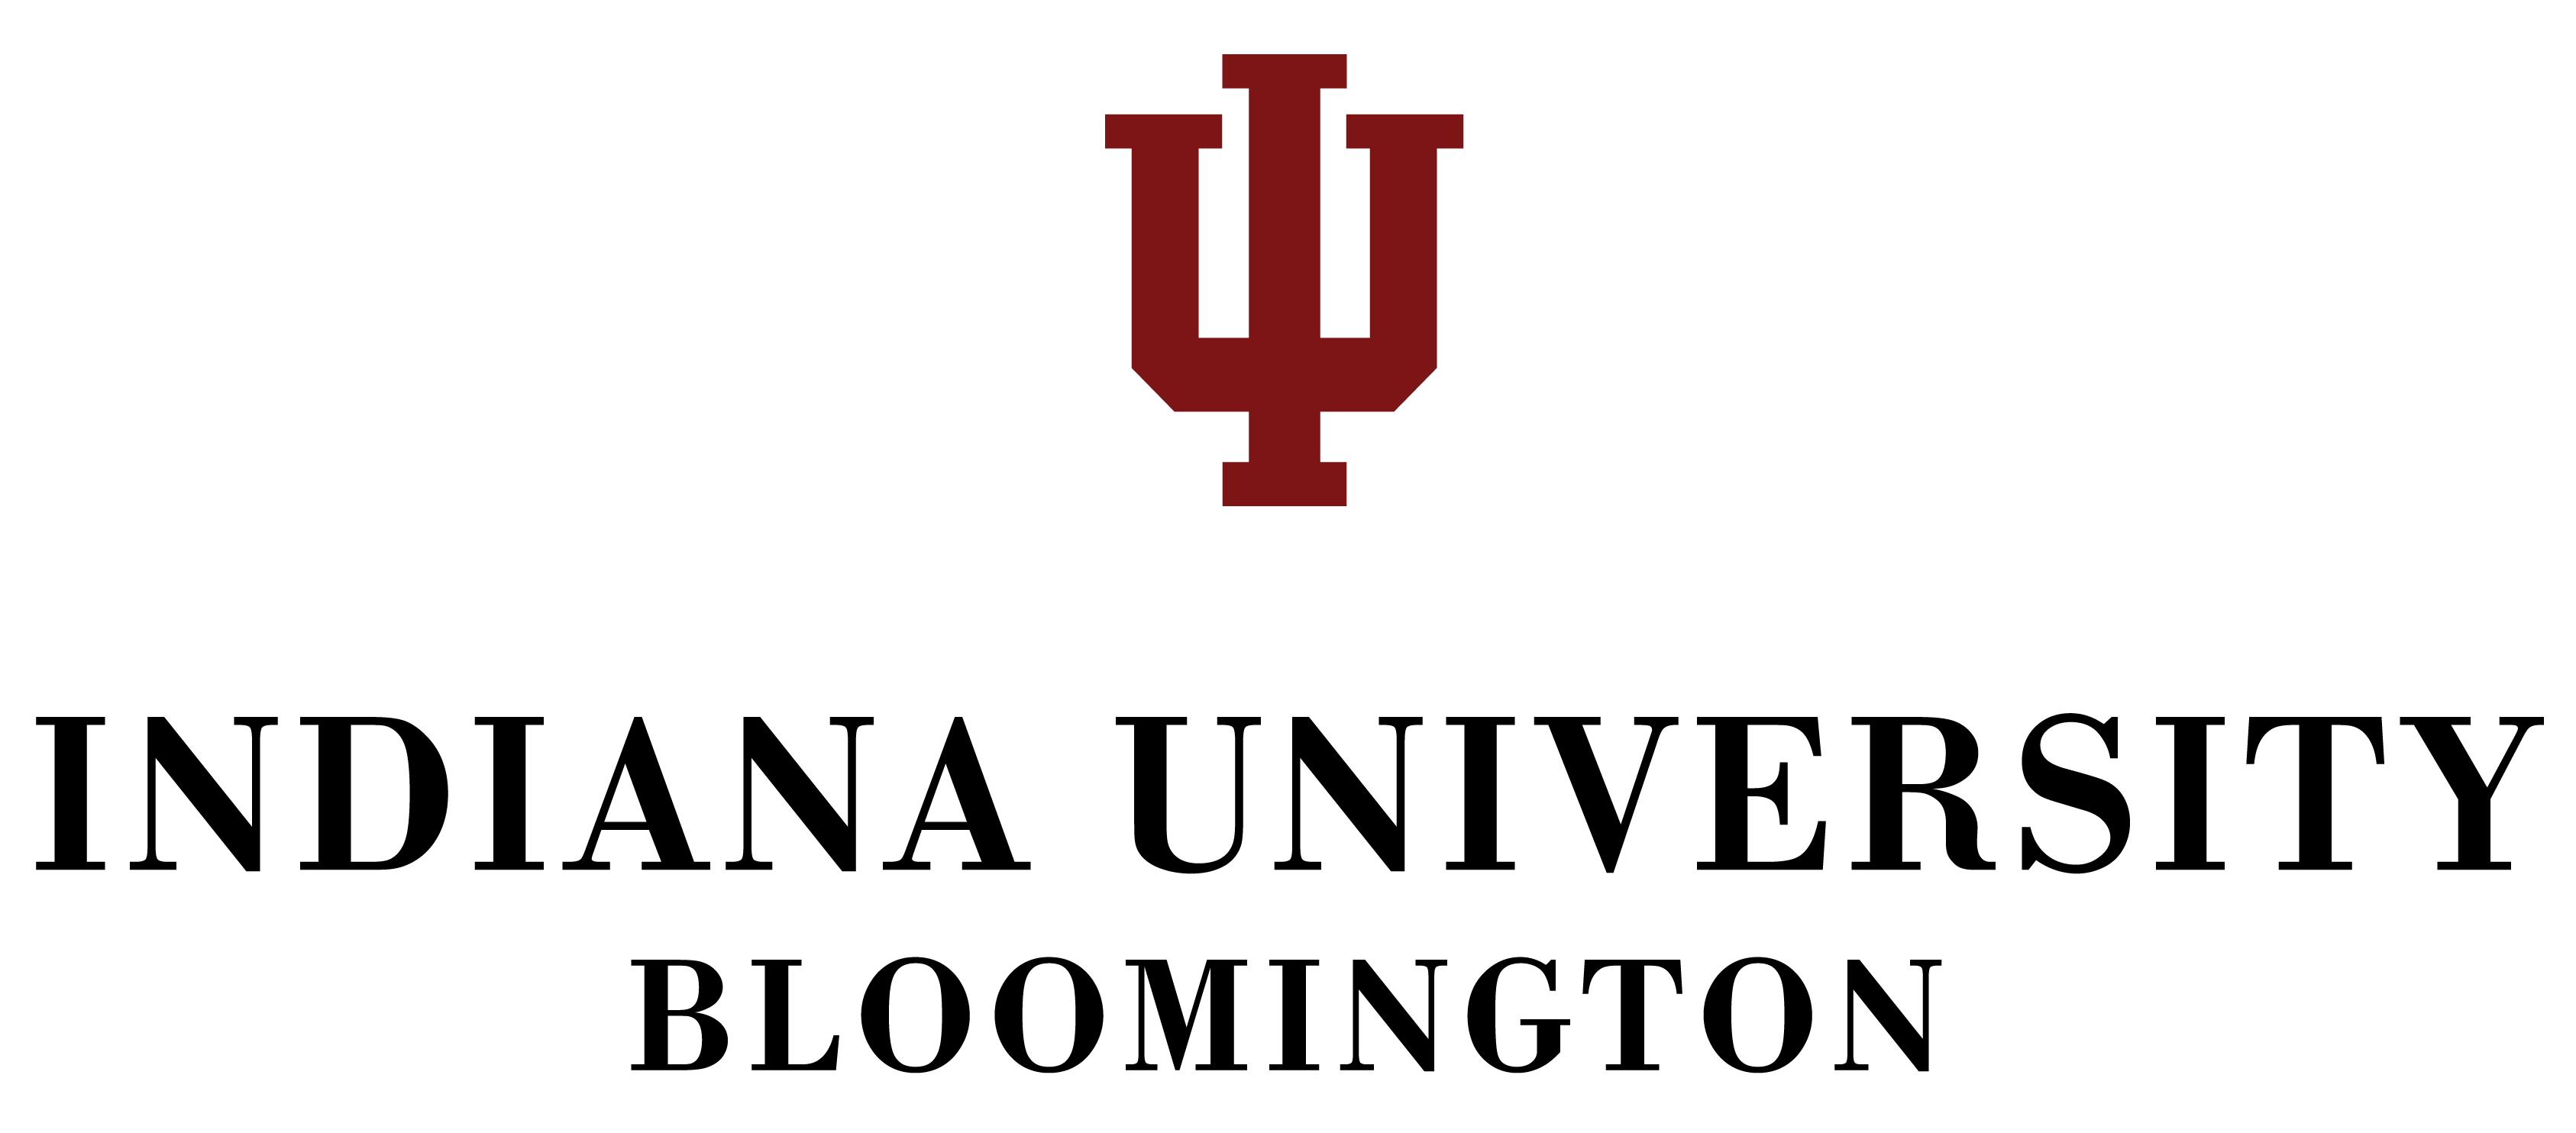 IU University Logo - Indiana university logo png 6 PNG Image